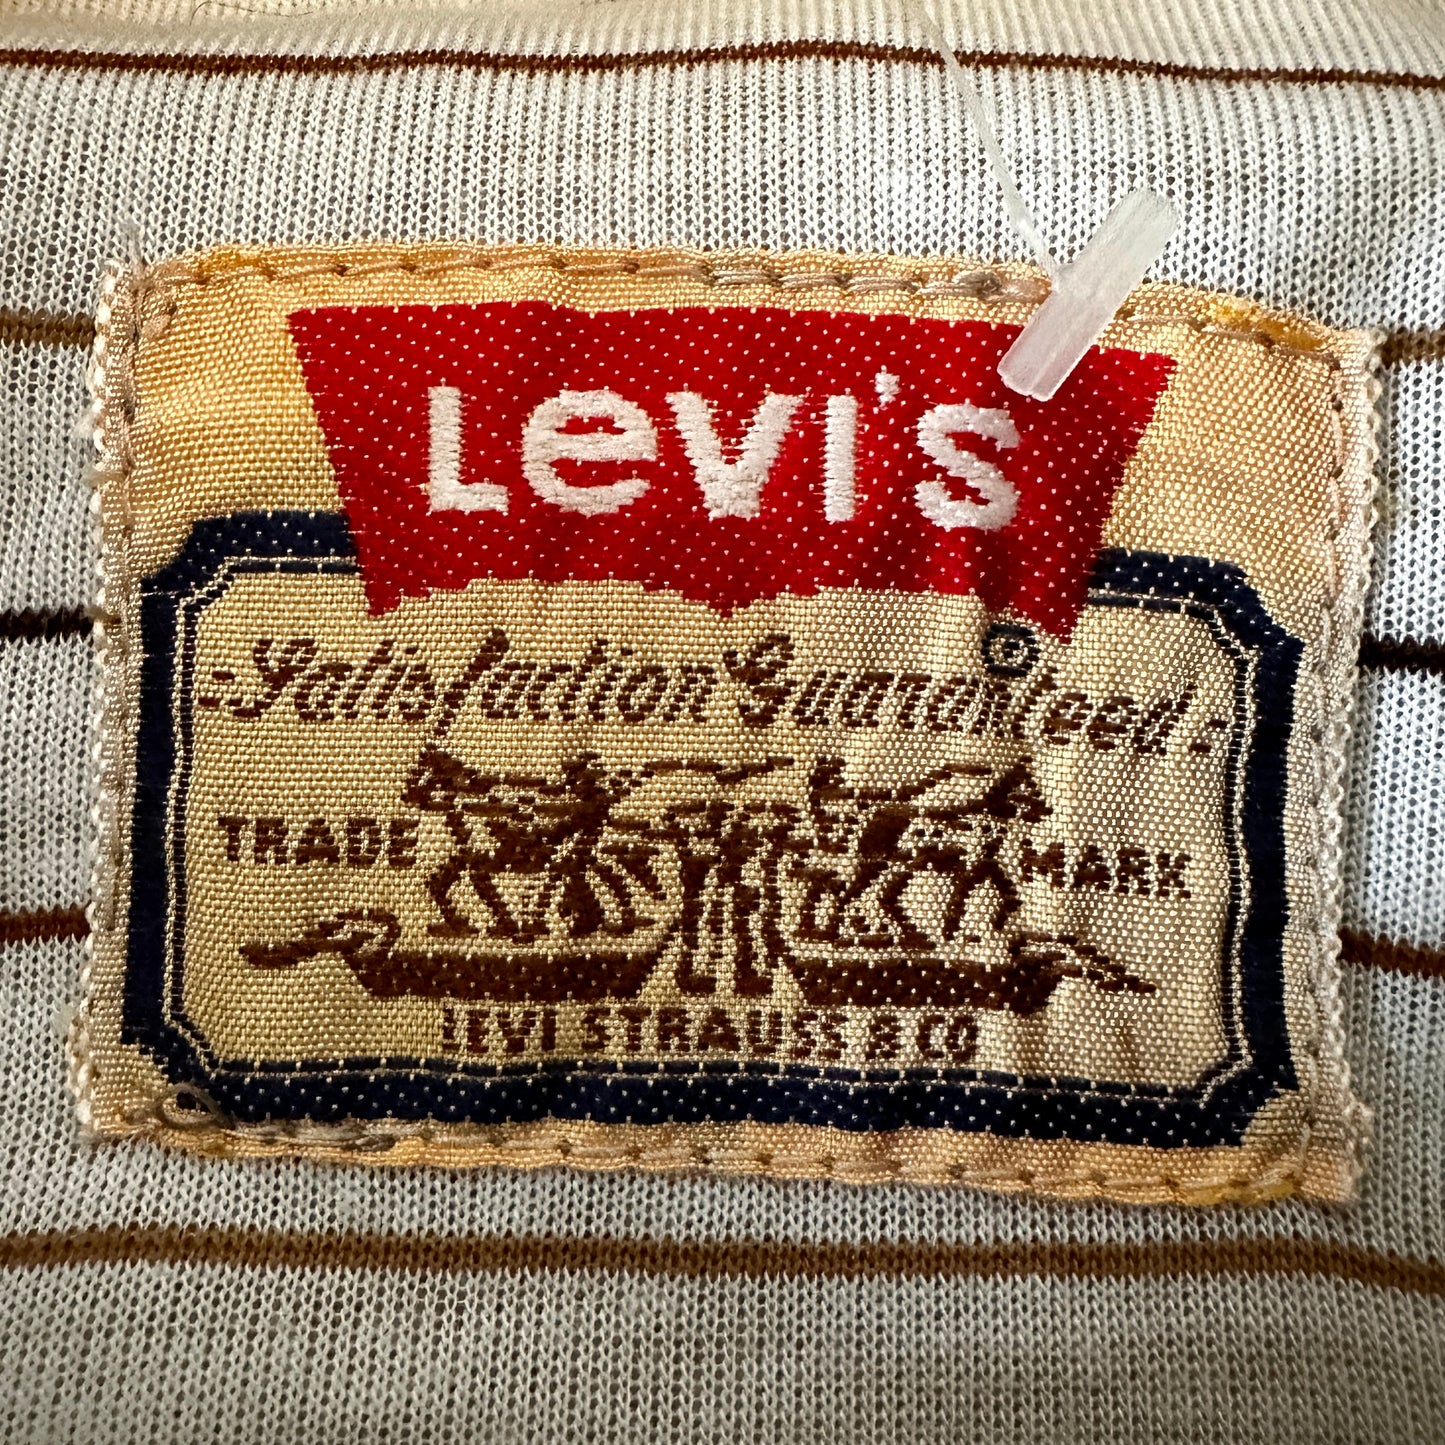 Levi's Vintage 80s Cafe Racer Jacket -- Deadstock - XL - Made in Spain